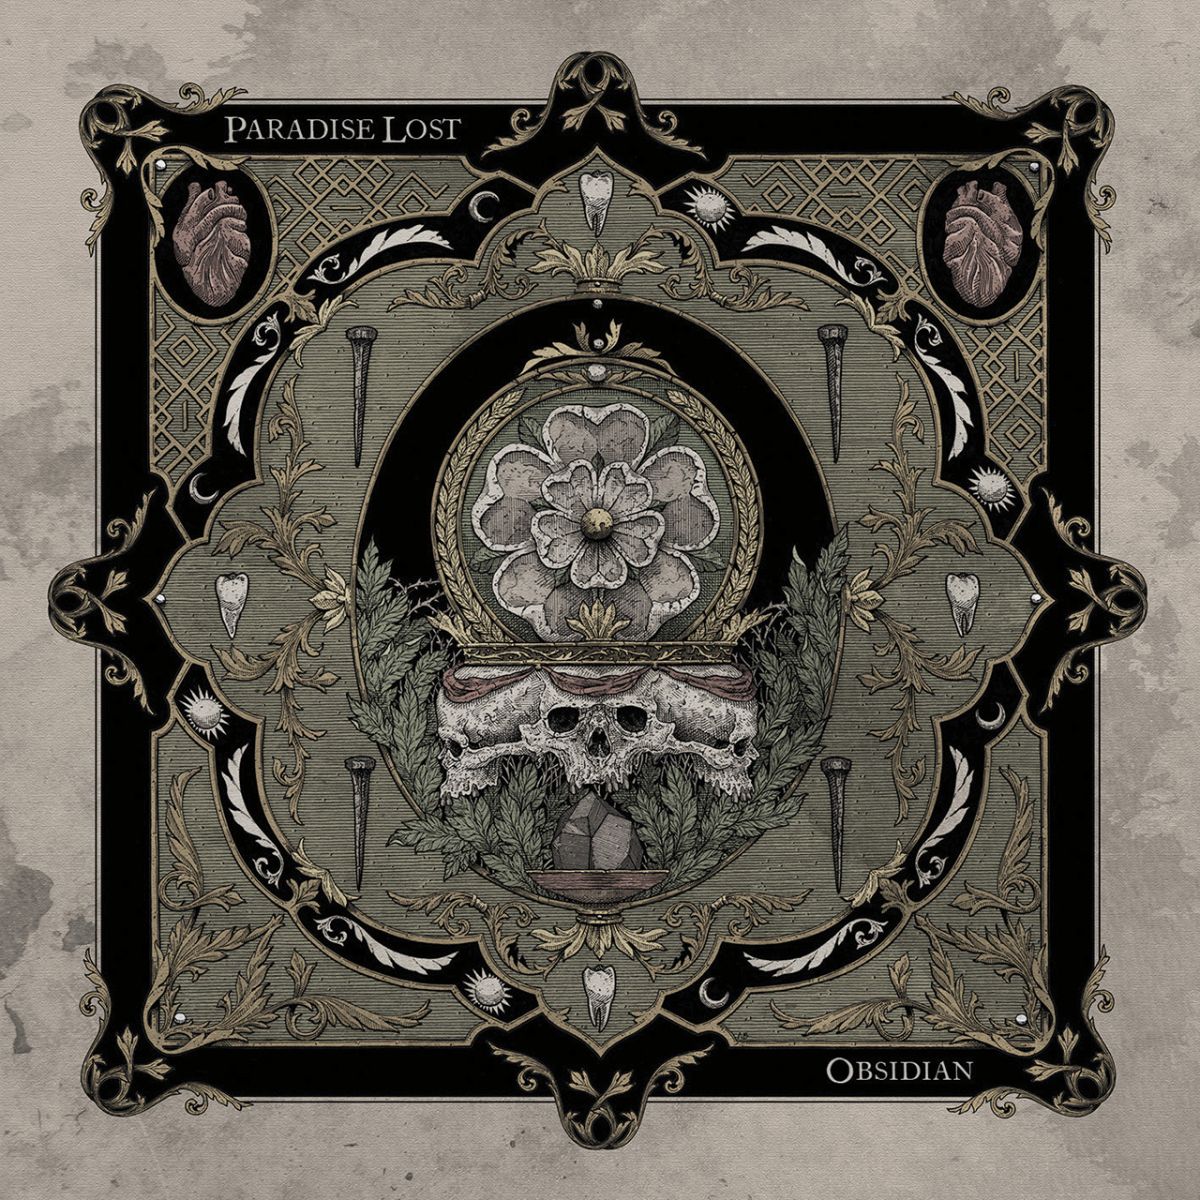 PARADISE LOST анонсировали новый альбом Obsidian (2020)